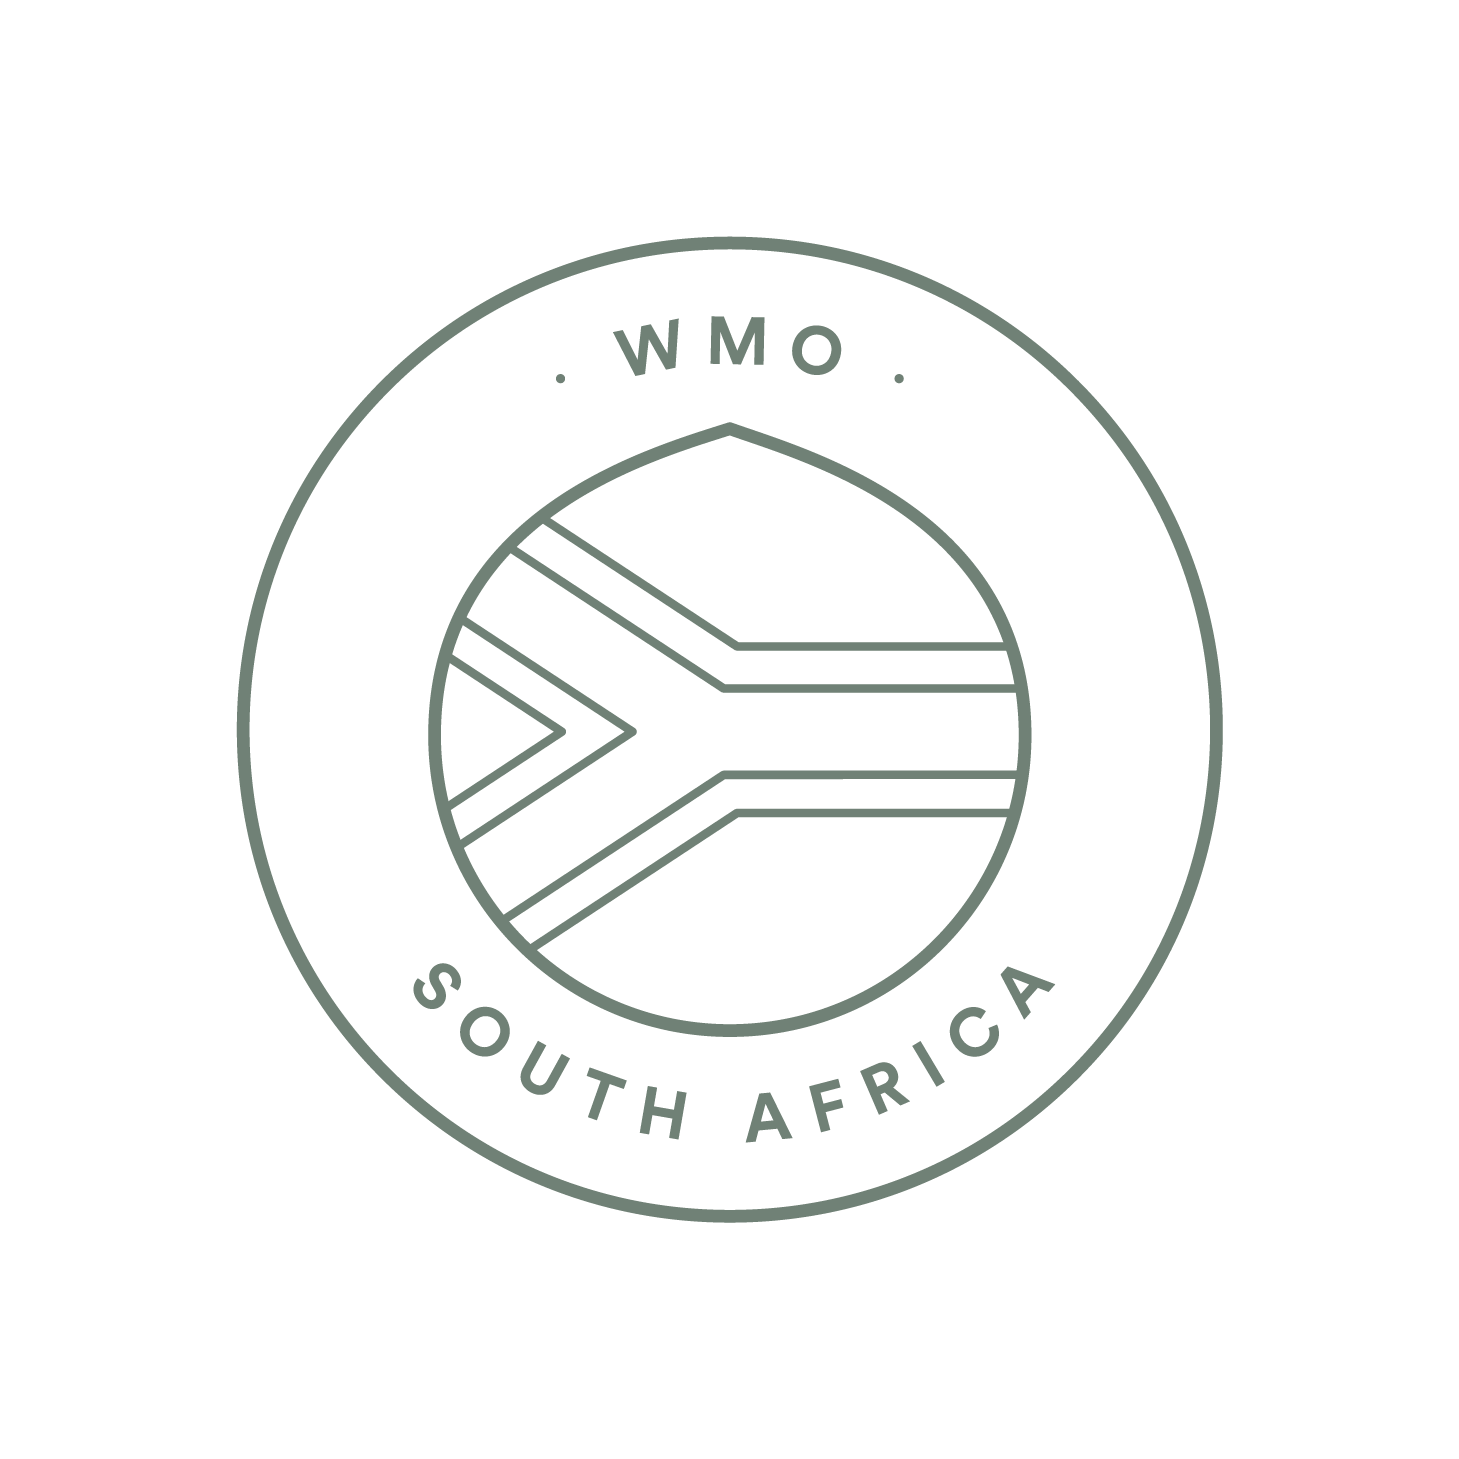 South Africa World Macadamia Organisation member